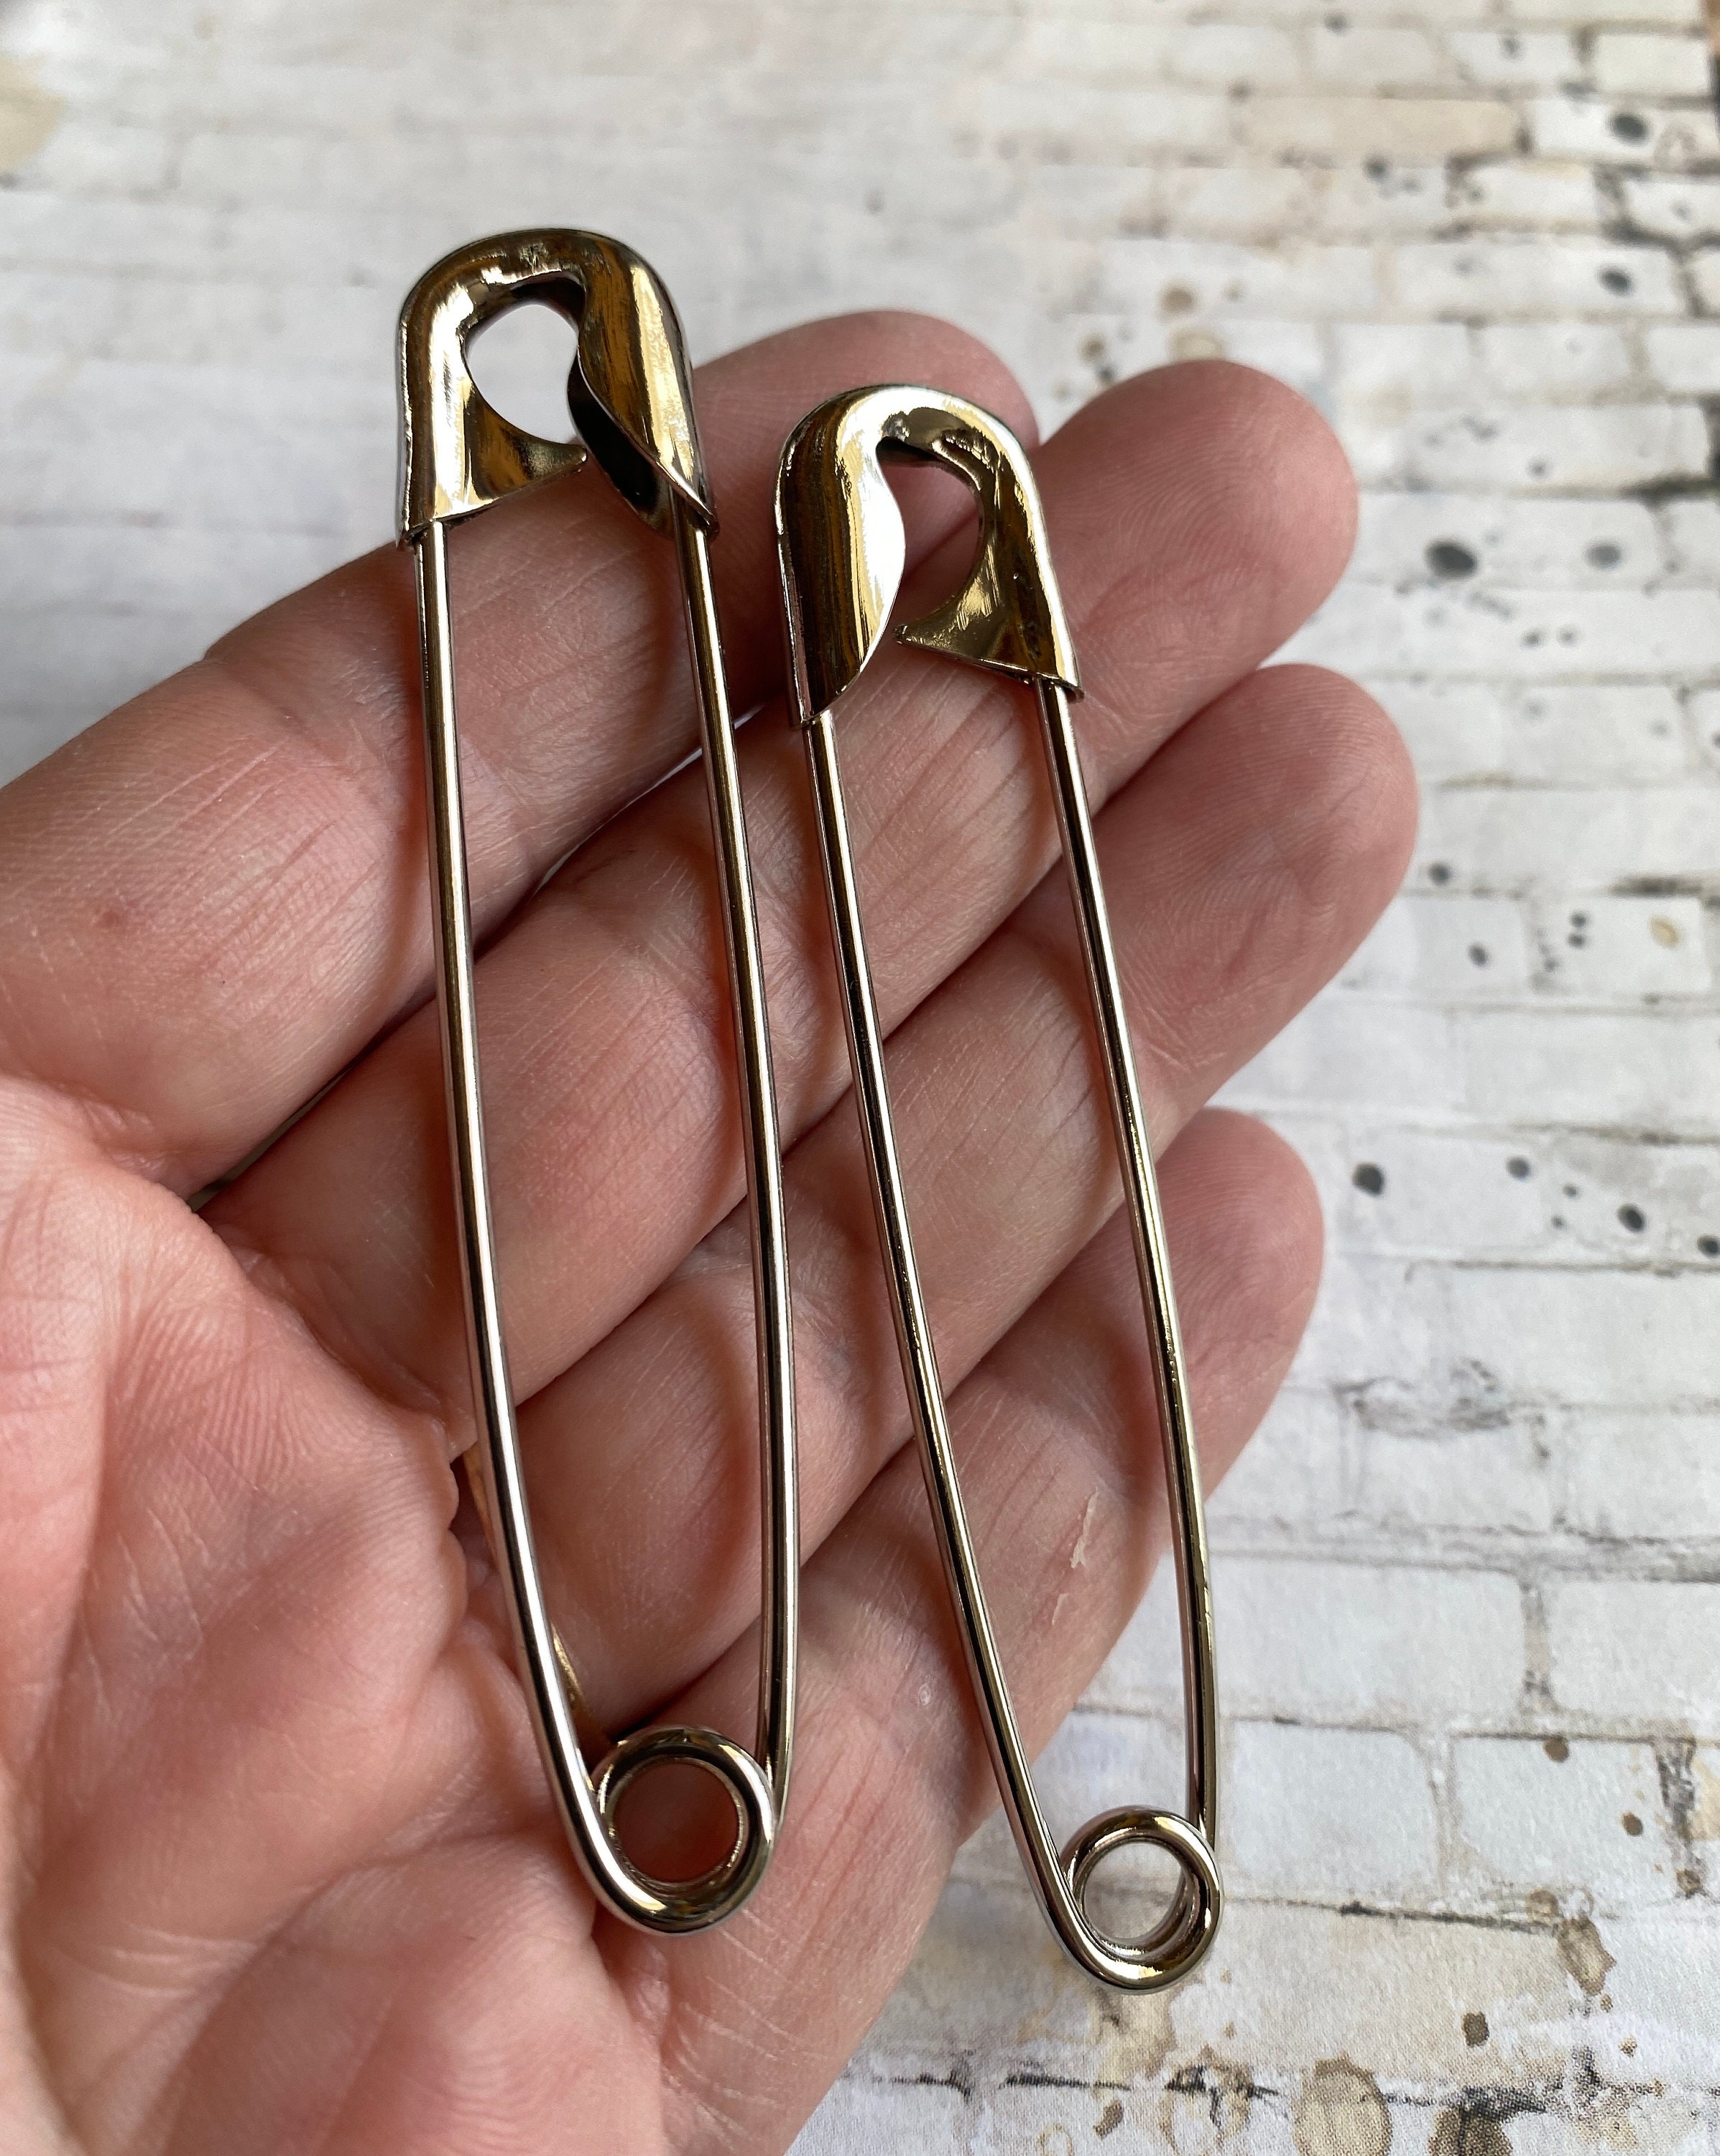 Dritz Safety Pins - Nickel, Assorted Sizes, Pkg of 10